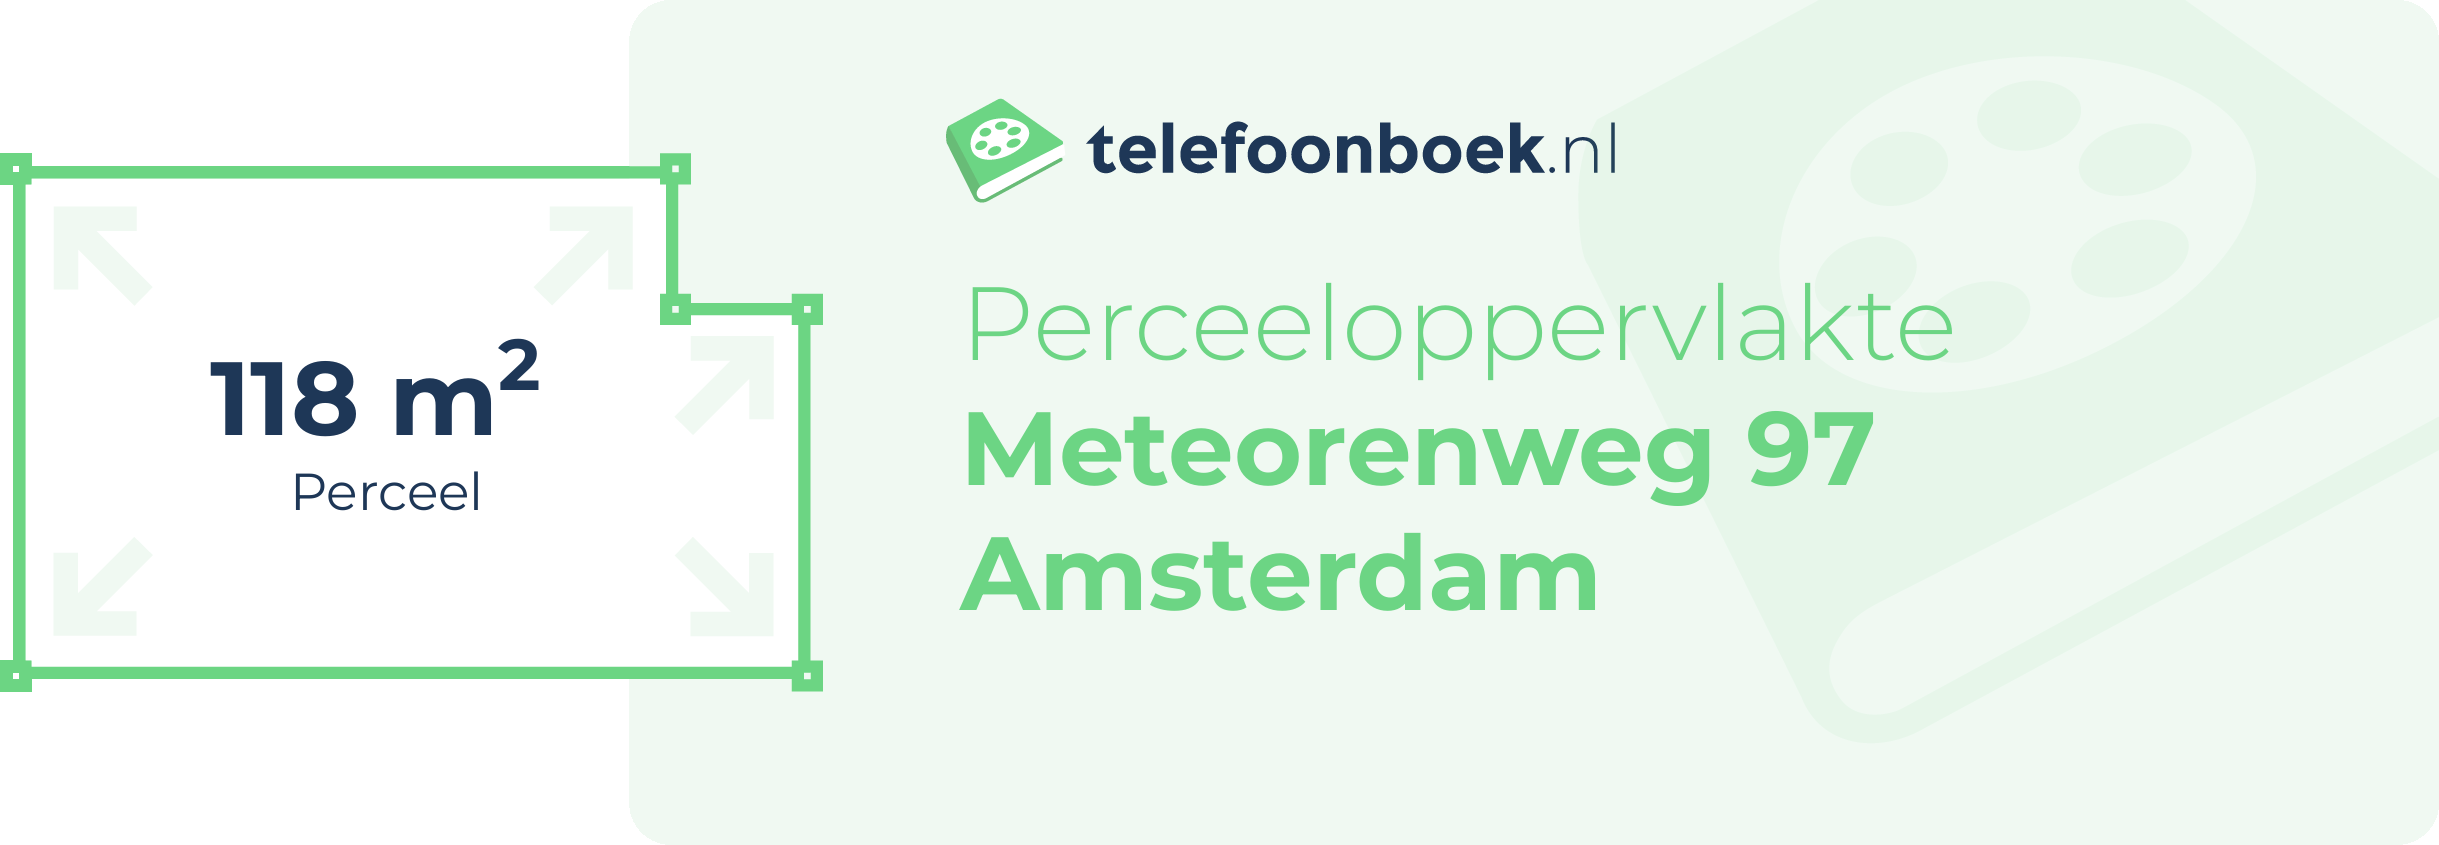 Perceeloppervlakte Meteorenweg 97 Amsterdam